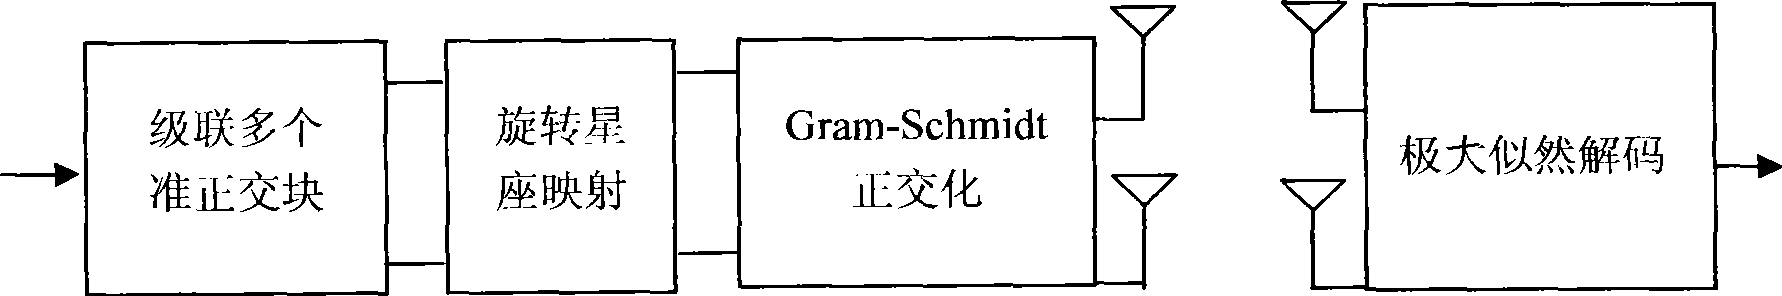 Unitary space time coding scheme based on Gram-Schmidt orthogonalization procedure